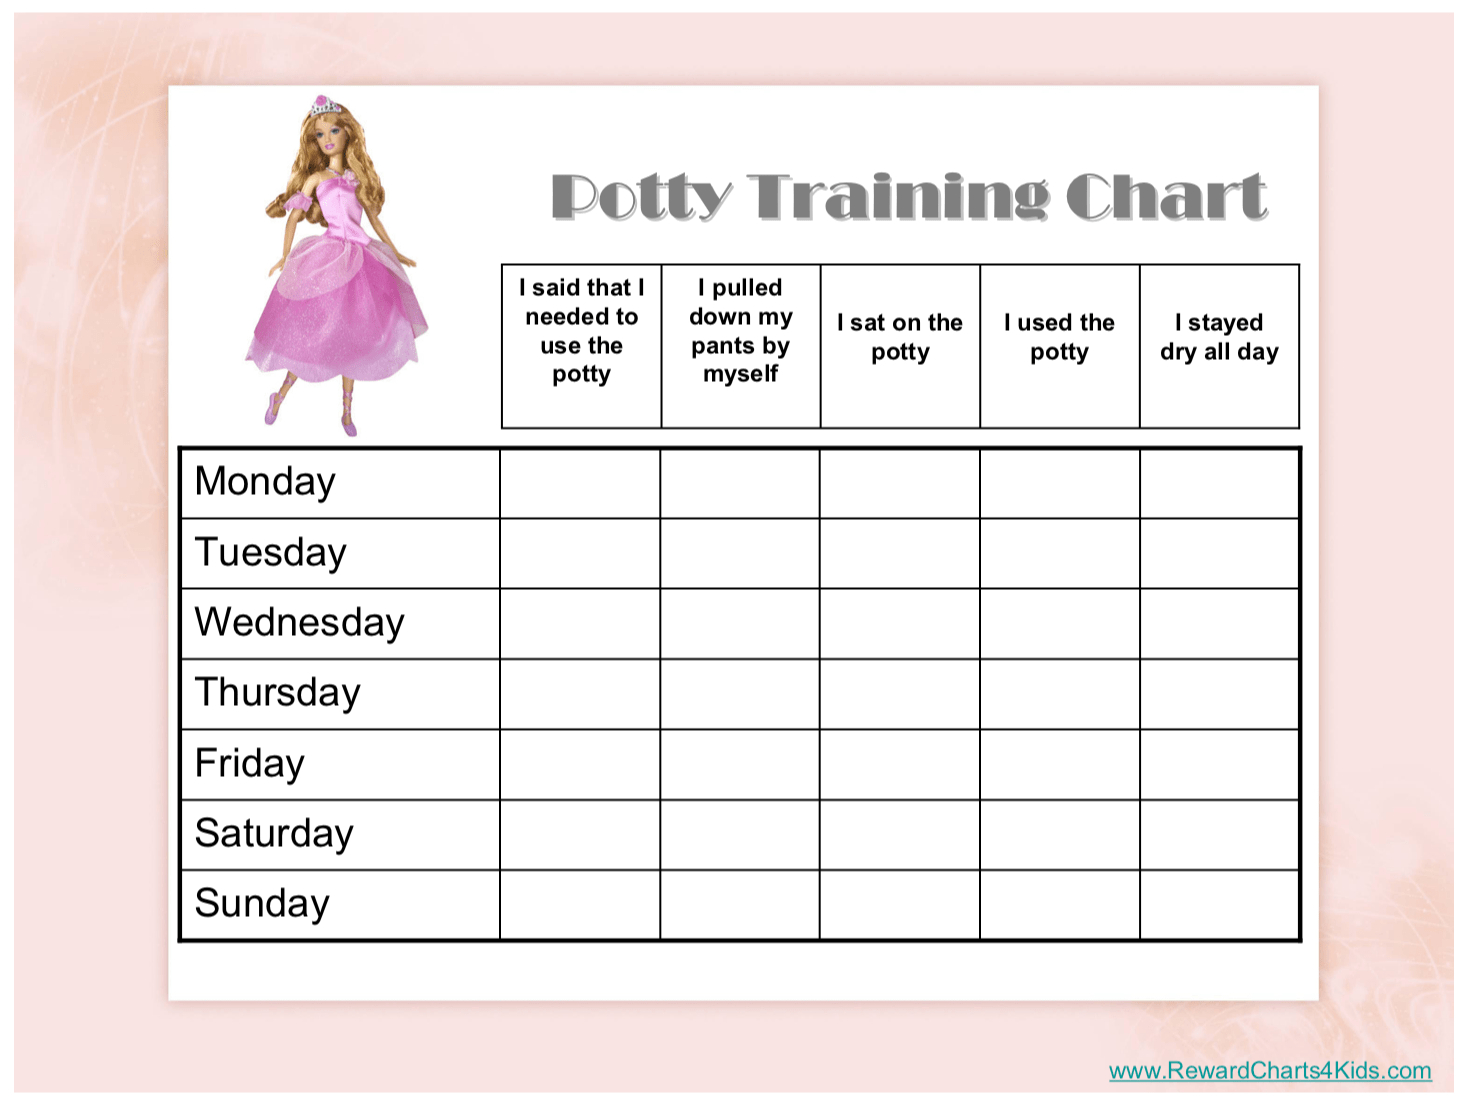 Free Printable Potty Training Charts - Potty Training - Free Printable Potty Training Charts